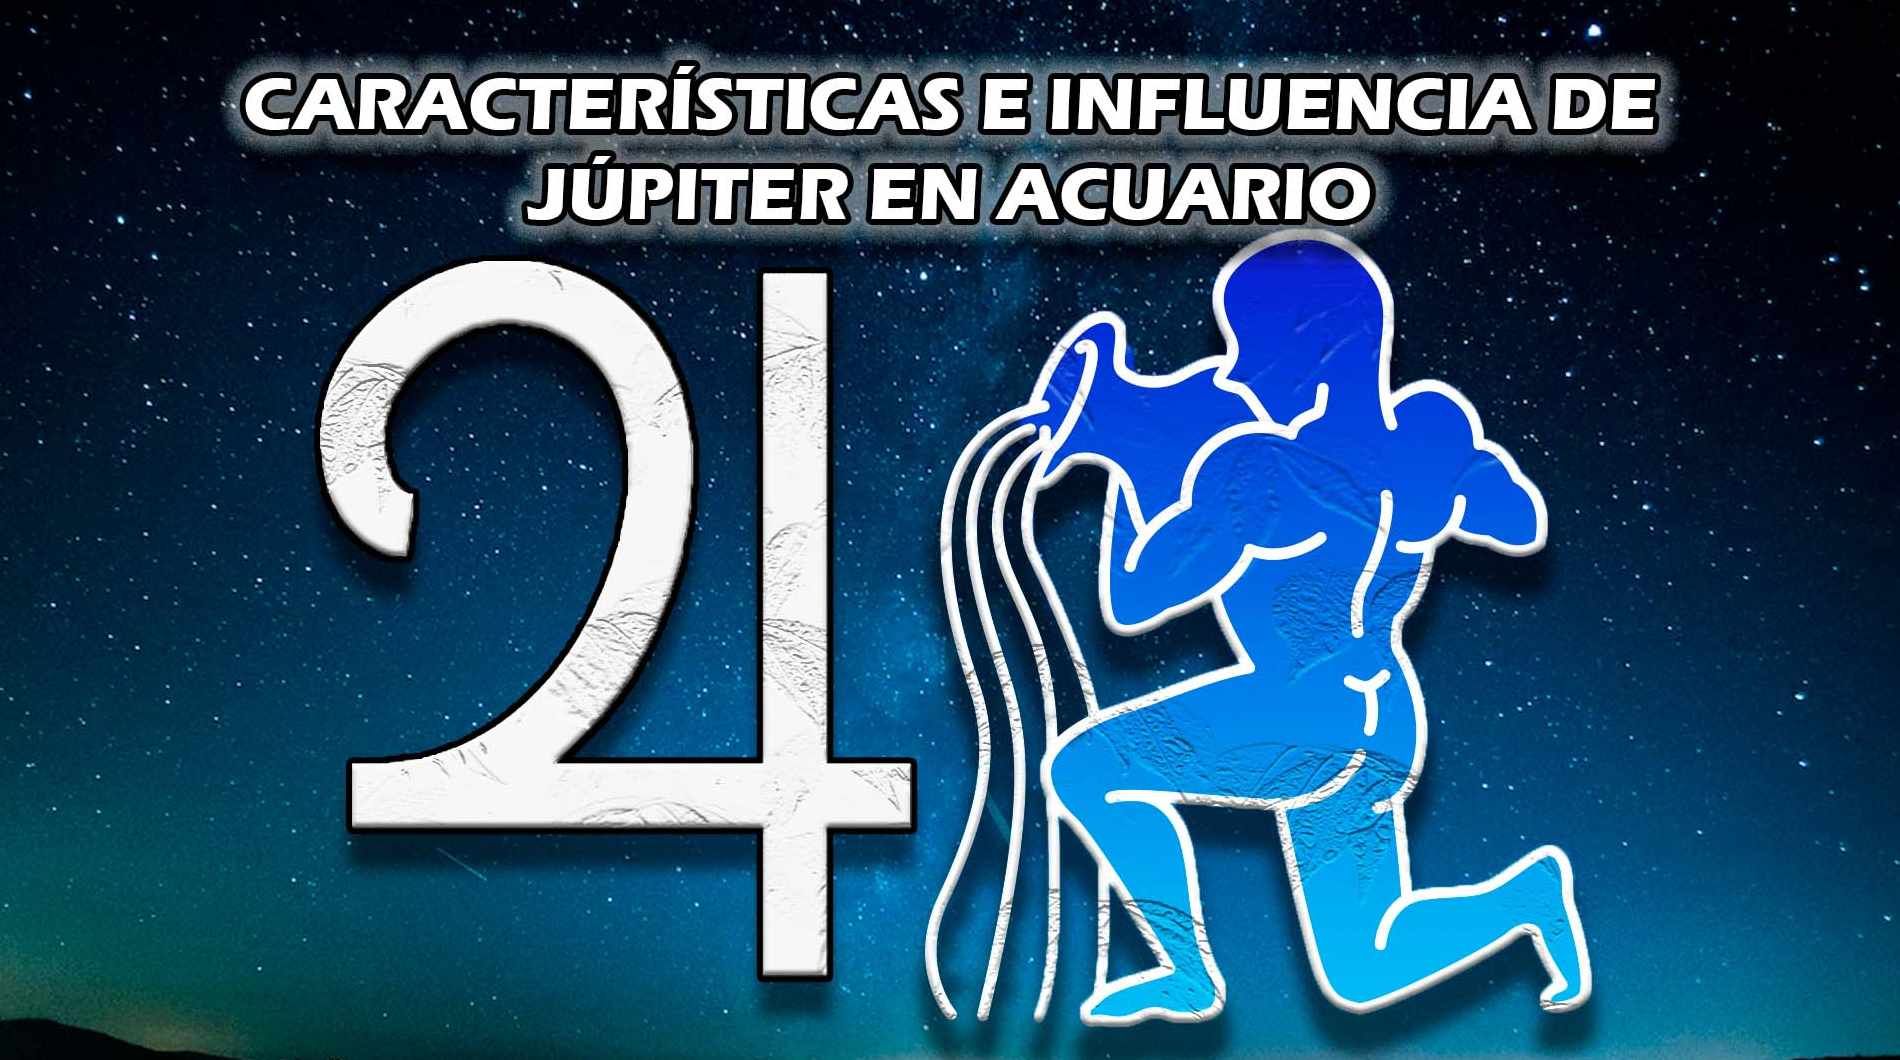 Jupiter នៅ Aquarius នៅក្នុងផ្ទះទី 11